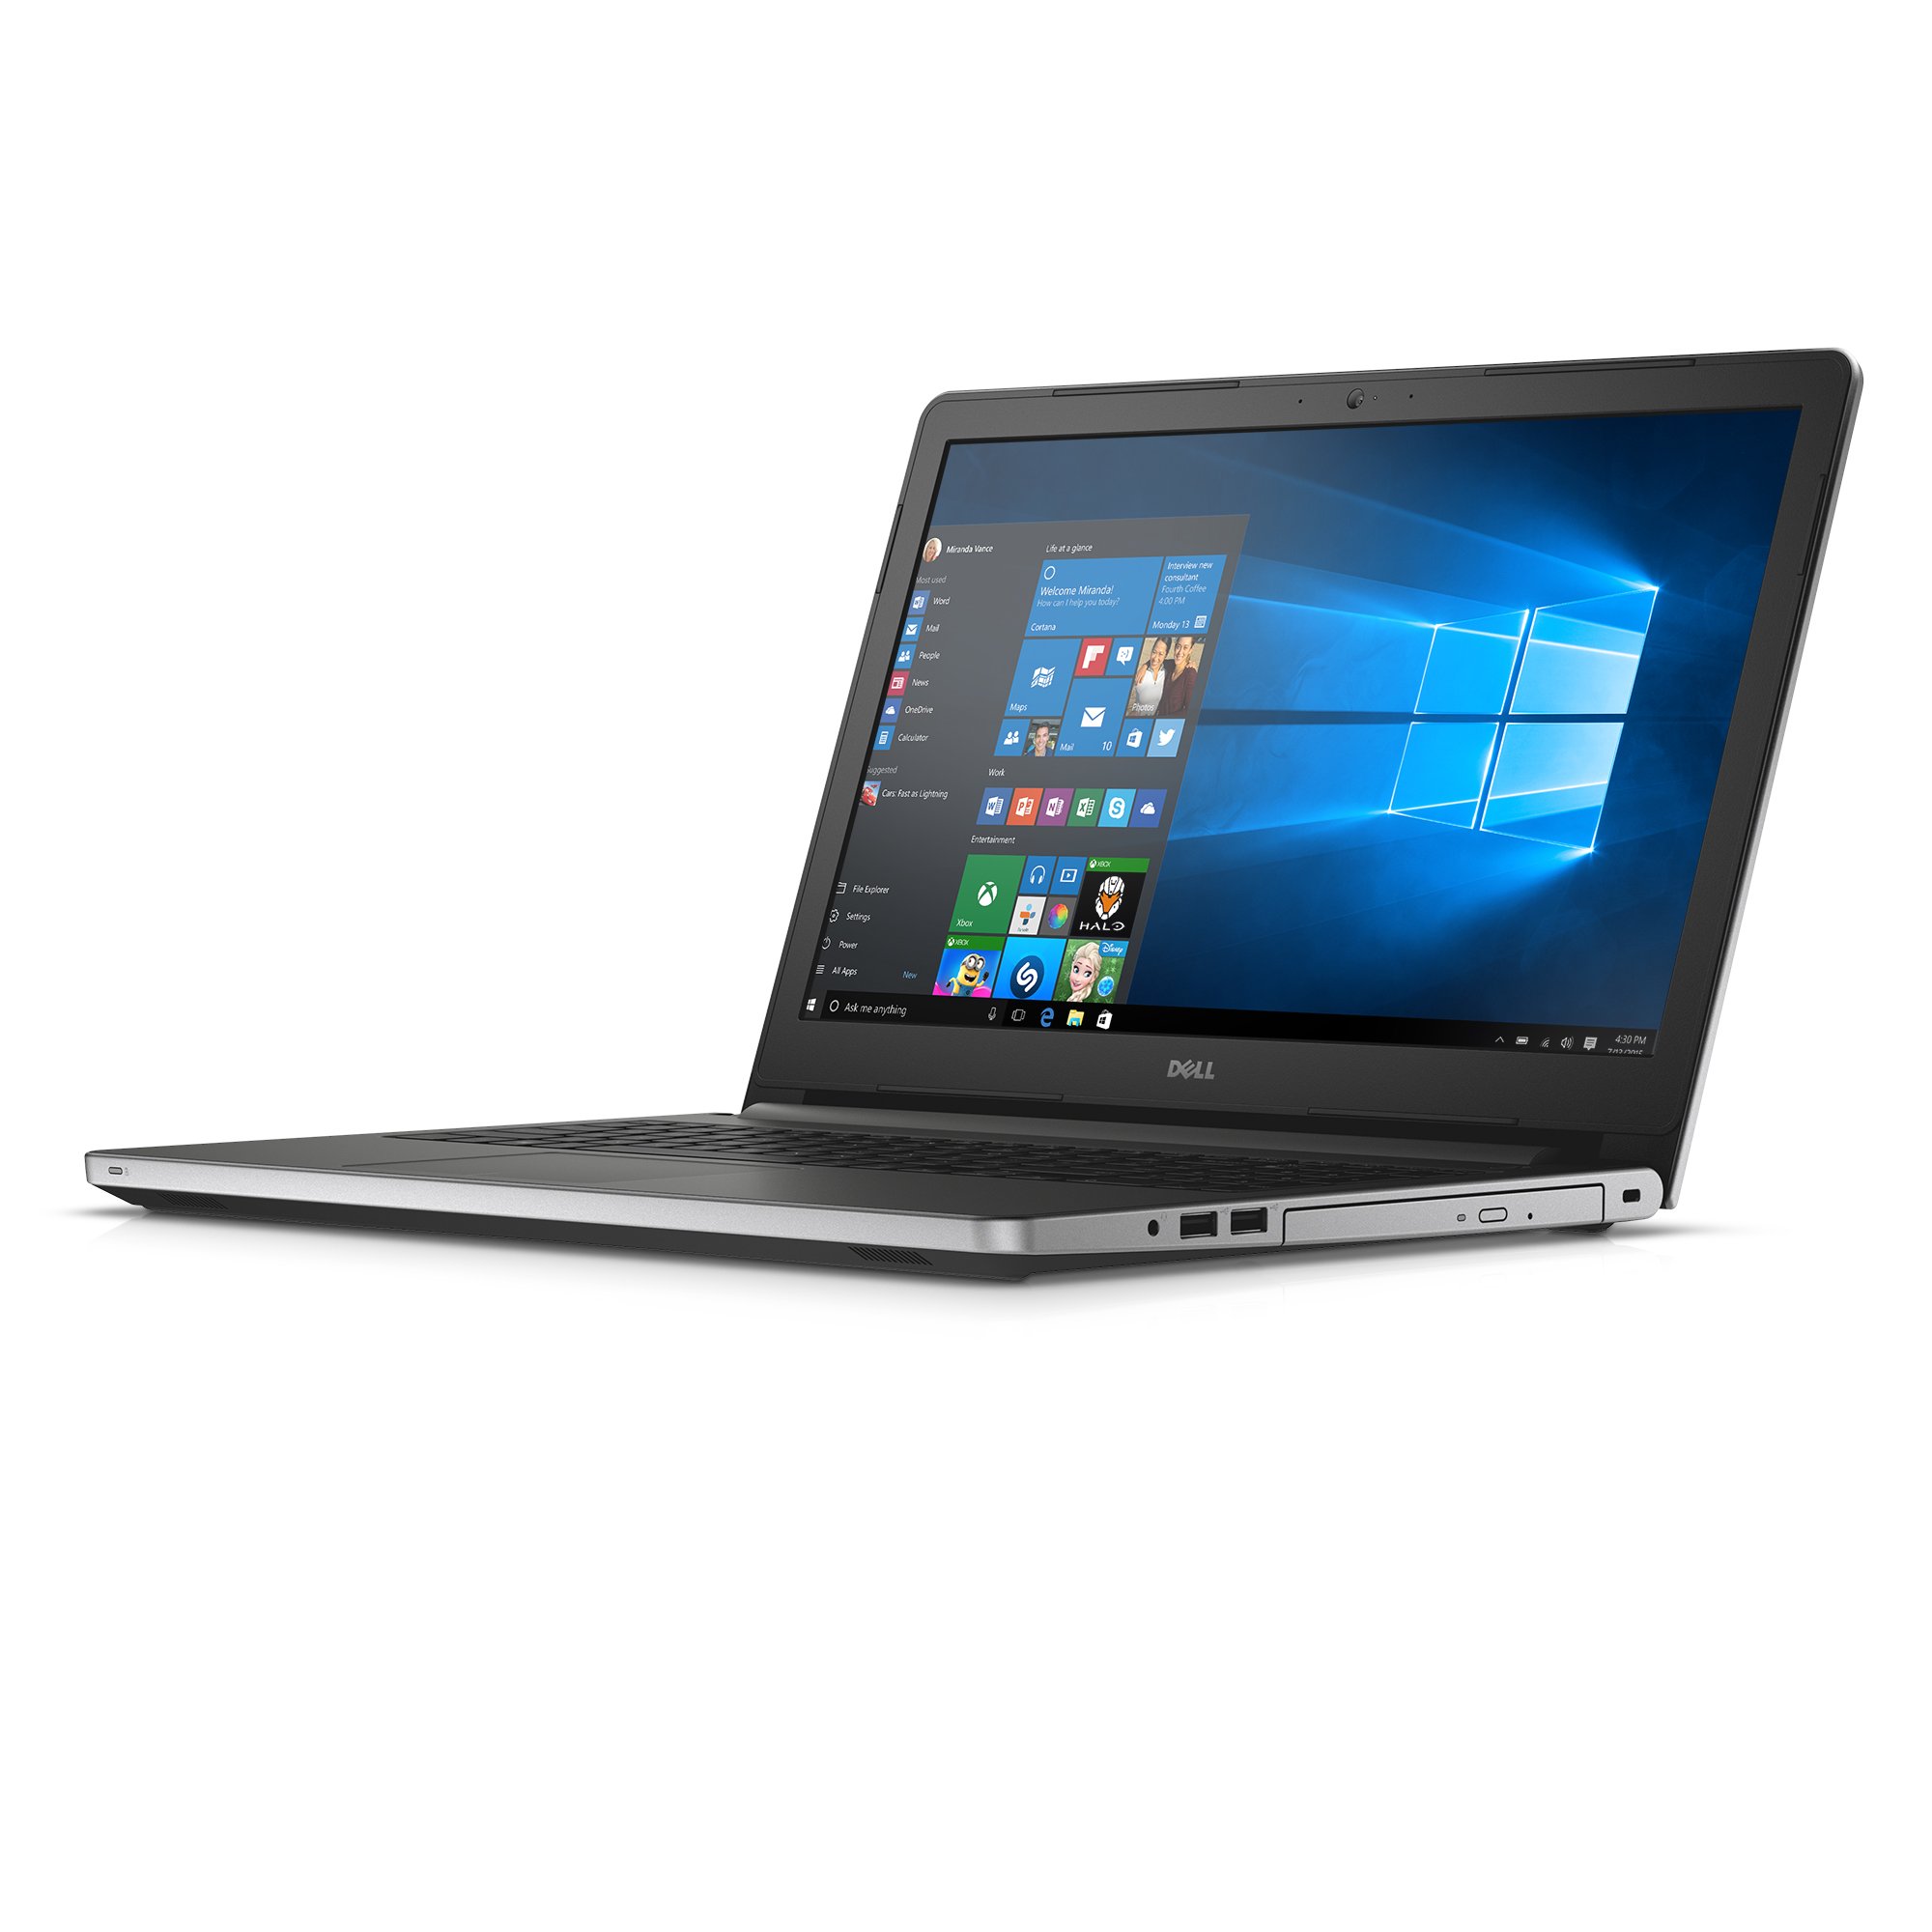 Dell Inspiron i5559-3347SLV 15.6 Inch Laptop (Intel Core i5, 8 GB RAM, 1 TB HDD, Silver Matte)